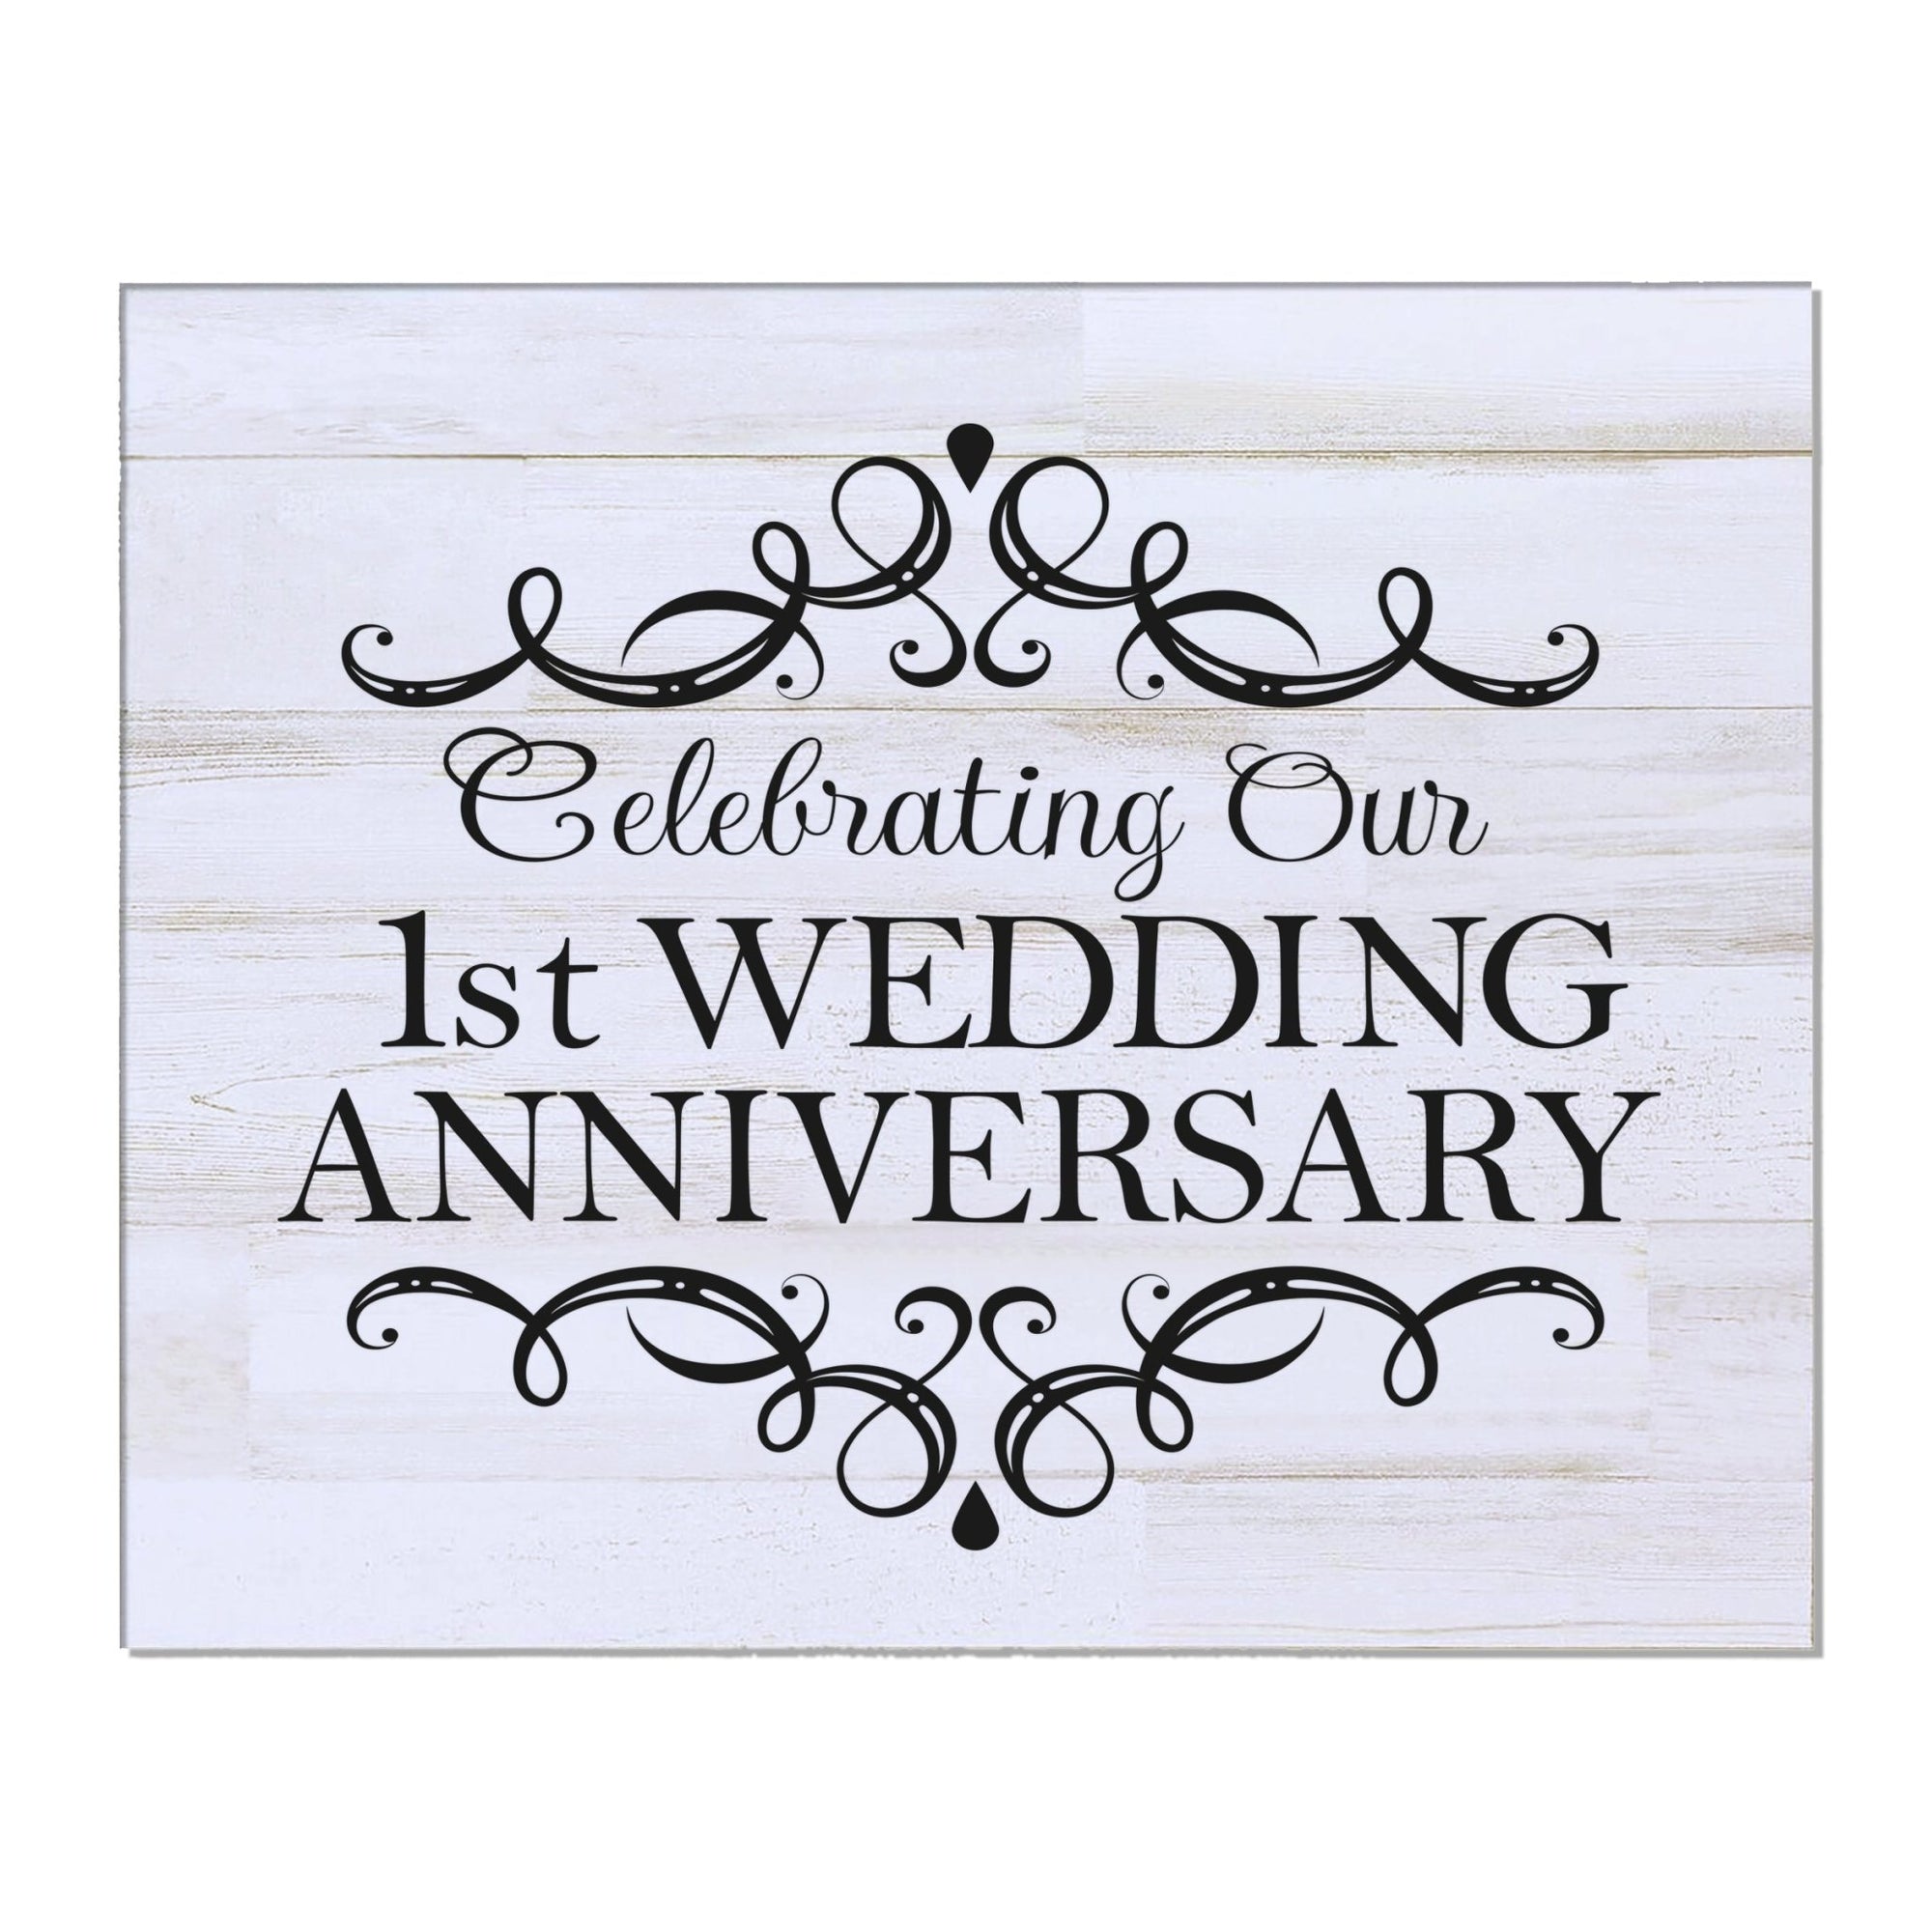 1st Wedding Anniversary Wall Plaque - Celebrating - LifeSong Milestones